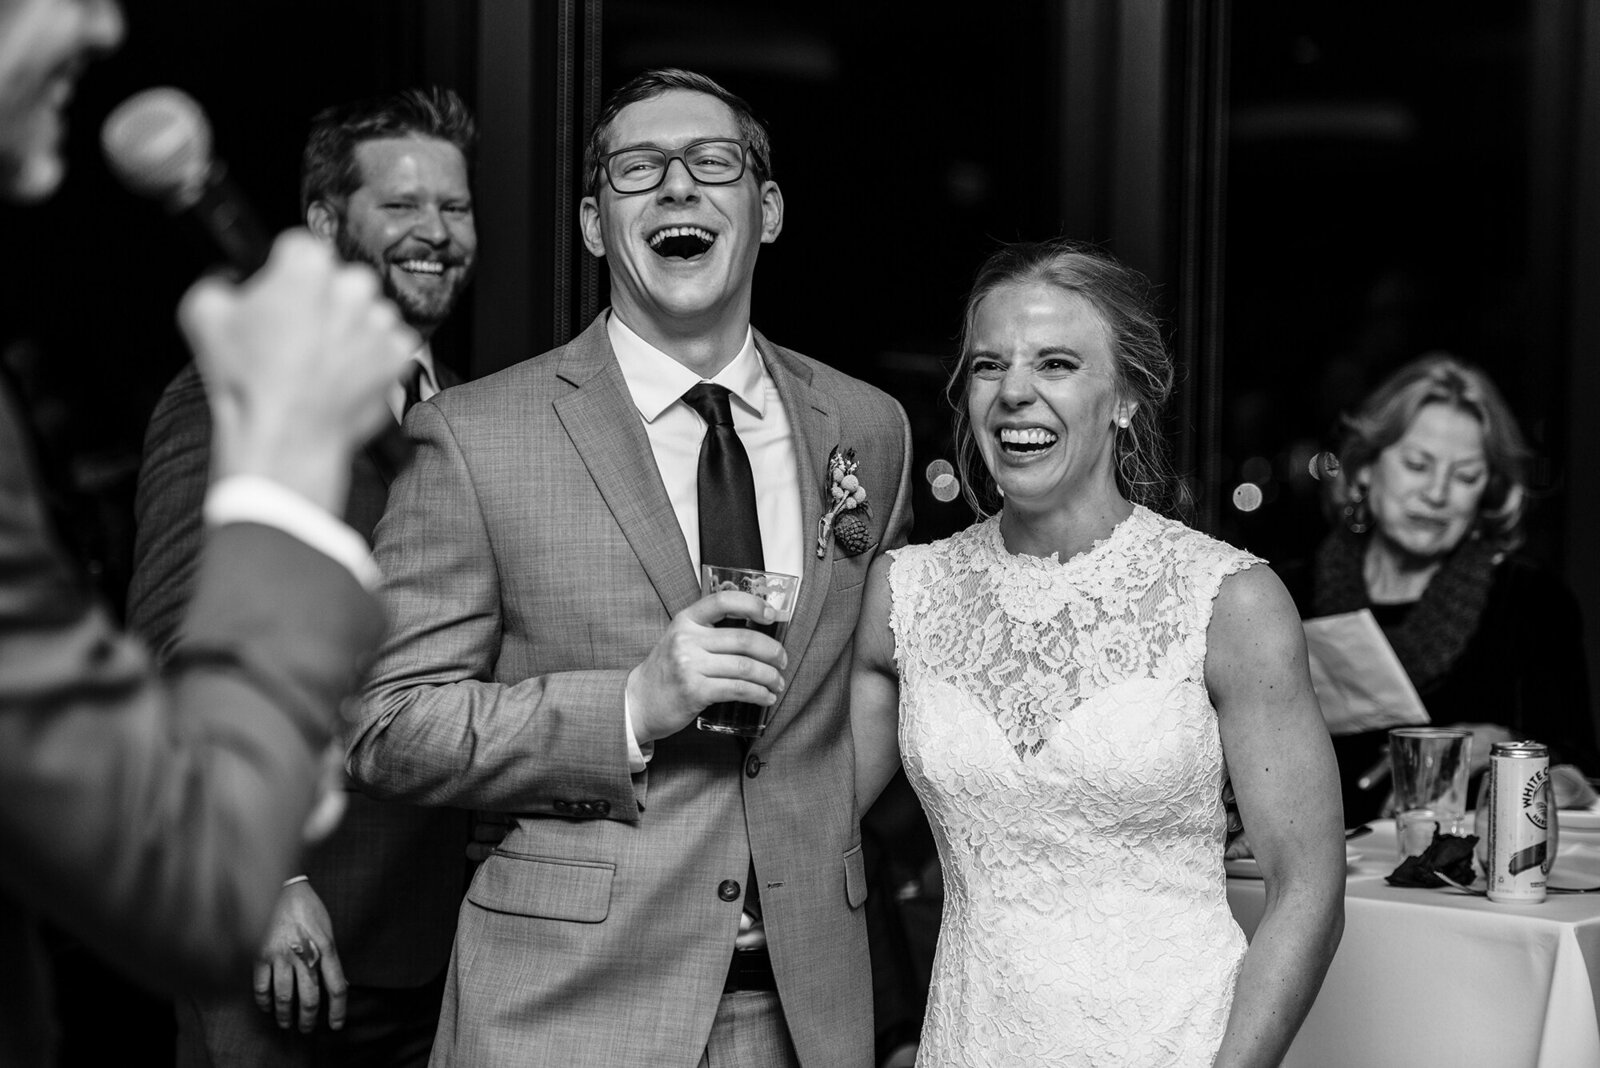 Bride and groom laugh at wedding reception.